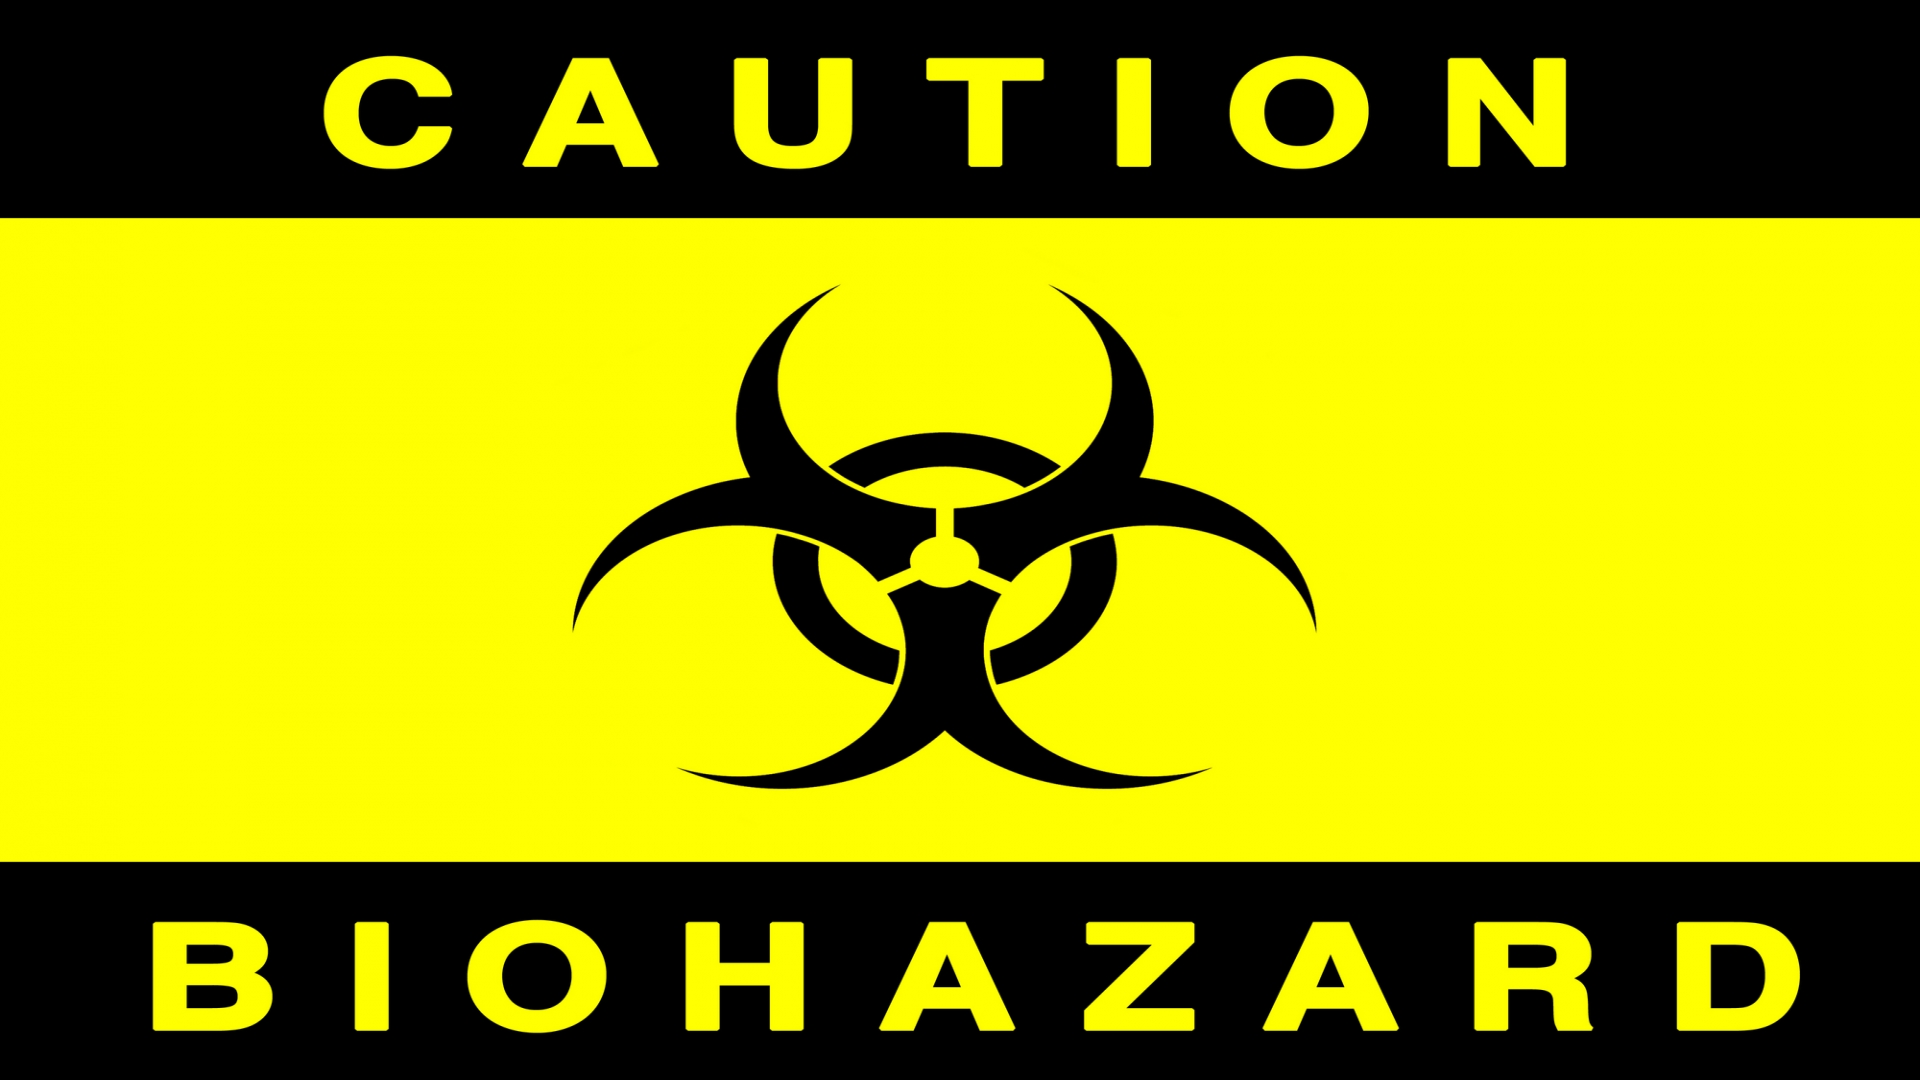 Free Download 1920x1080 Resolution Of High Definition Biohazard